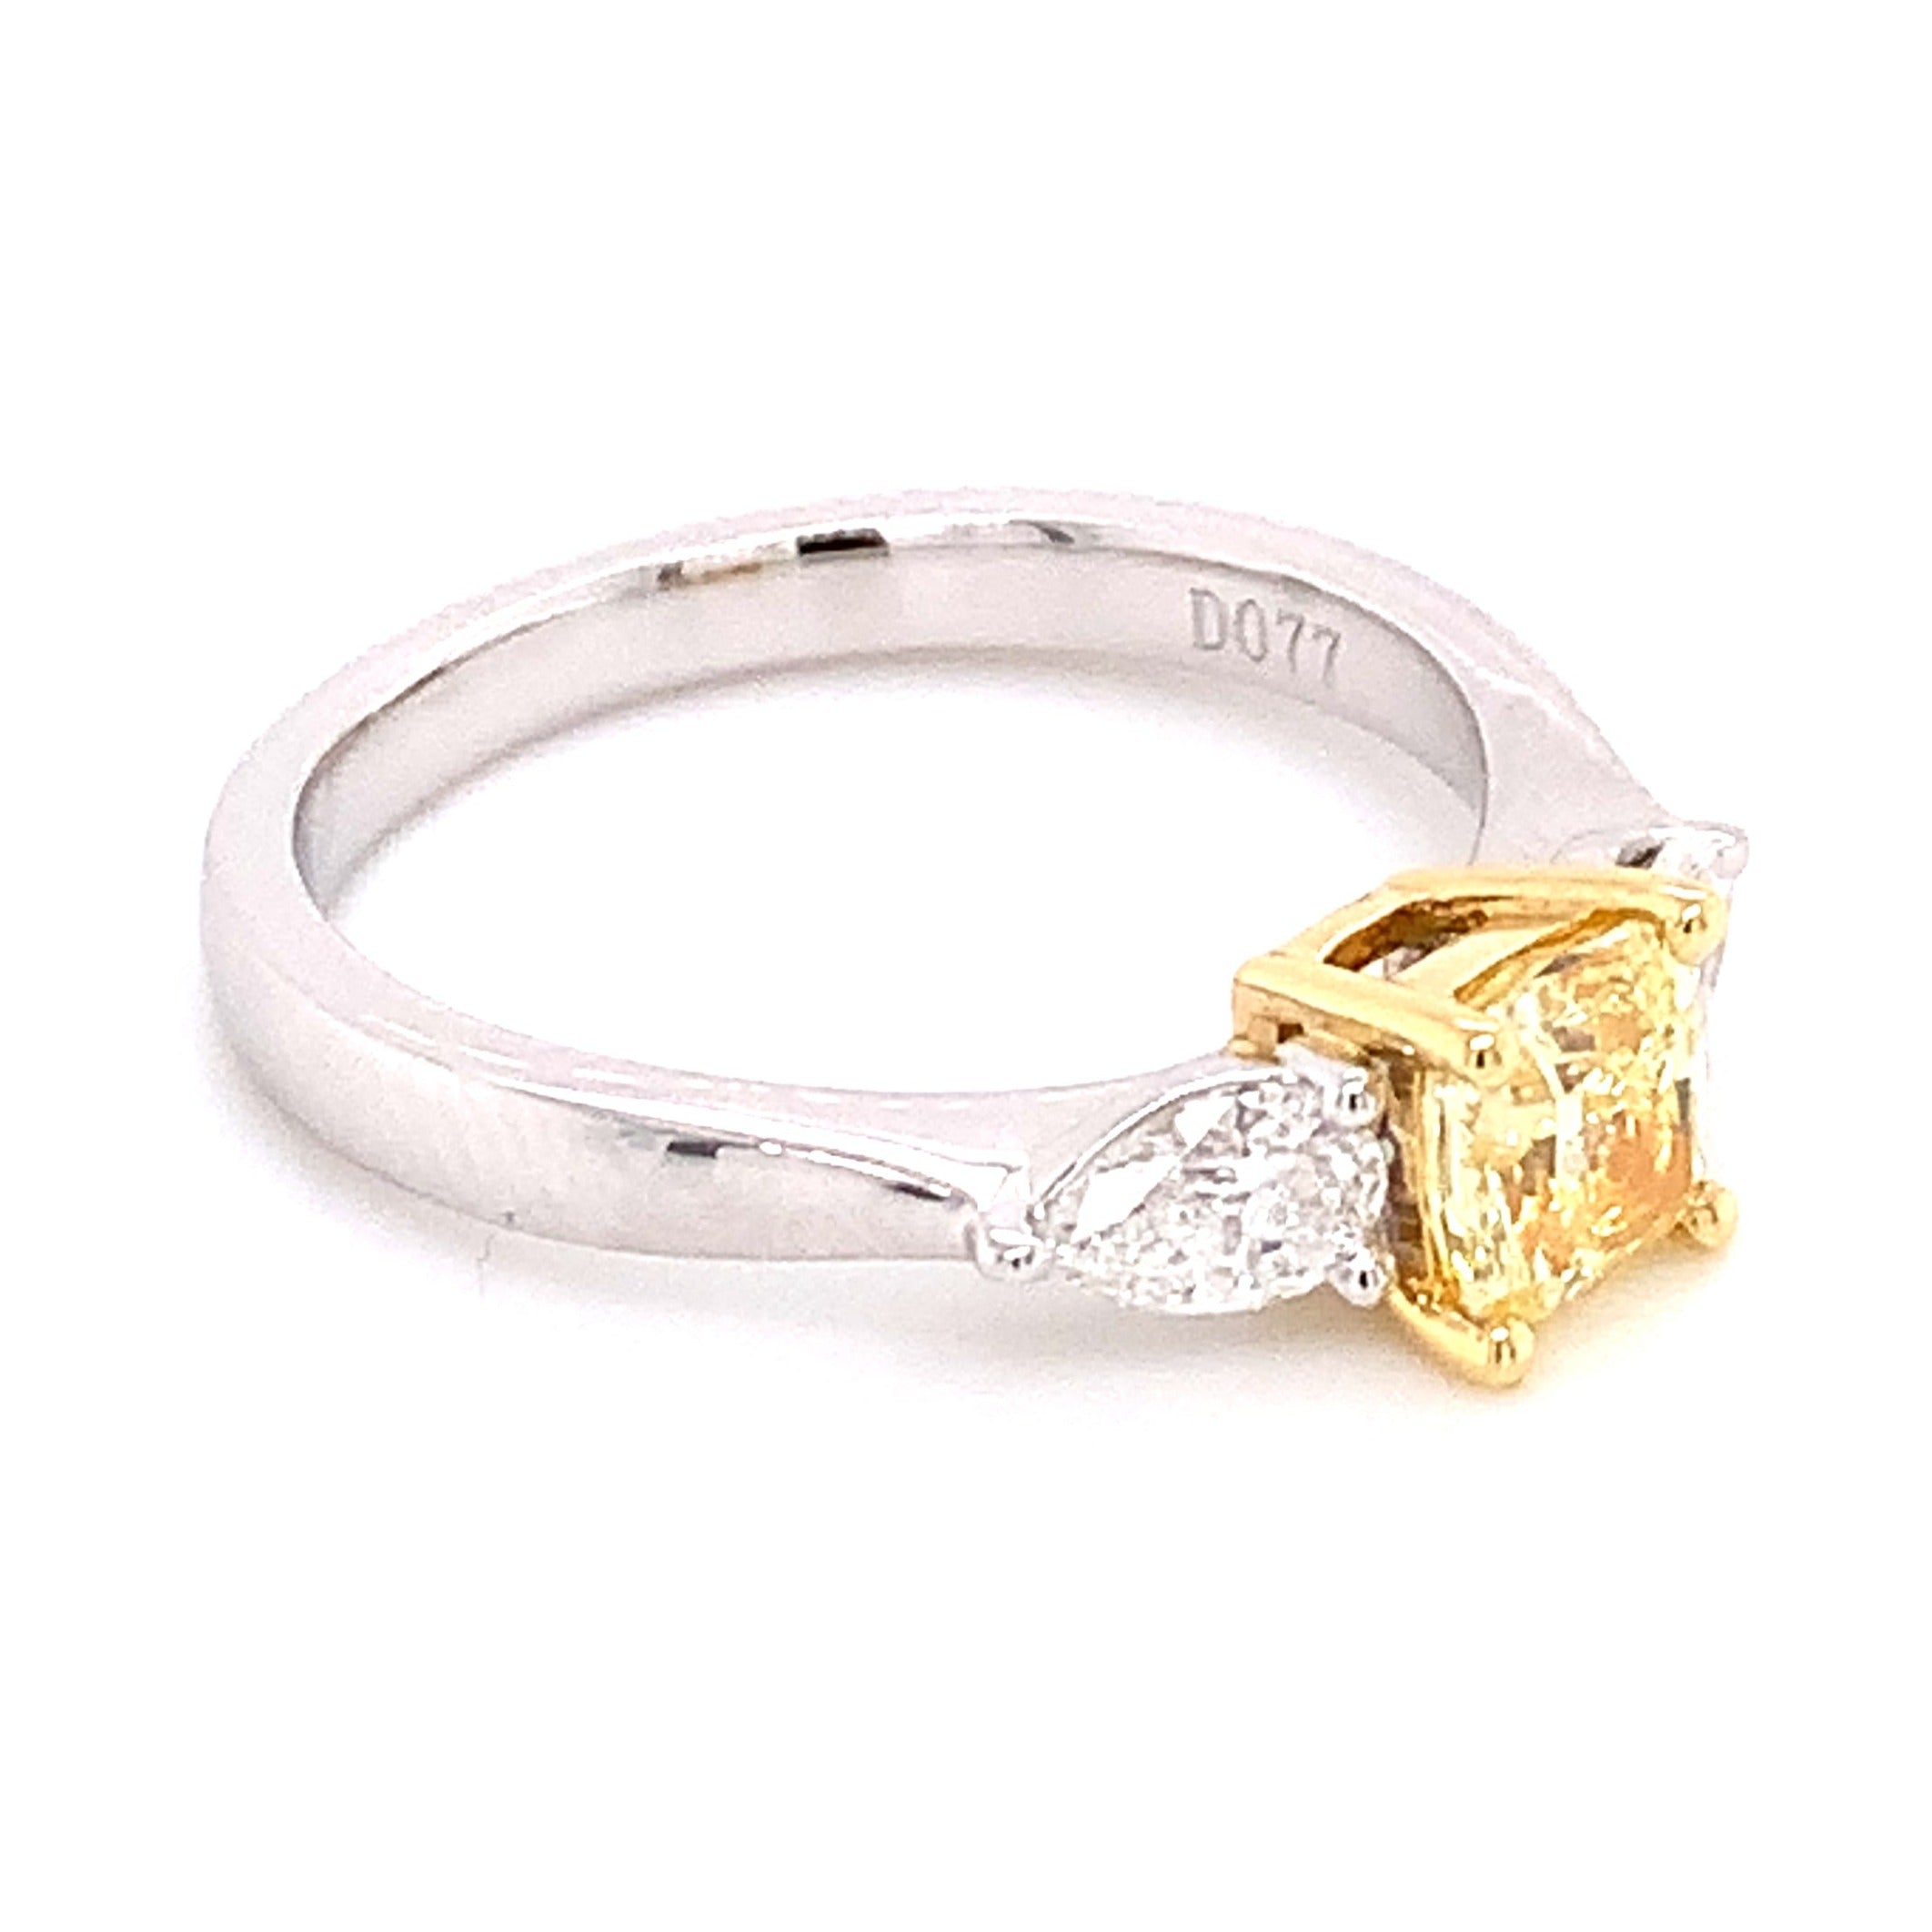 1.21ct Canary Fancy Yellow Three Stone Diamond Engagement Ring